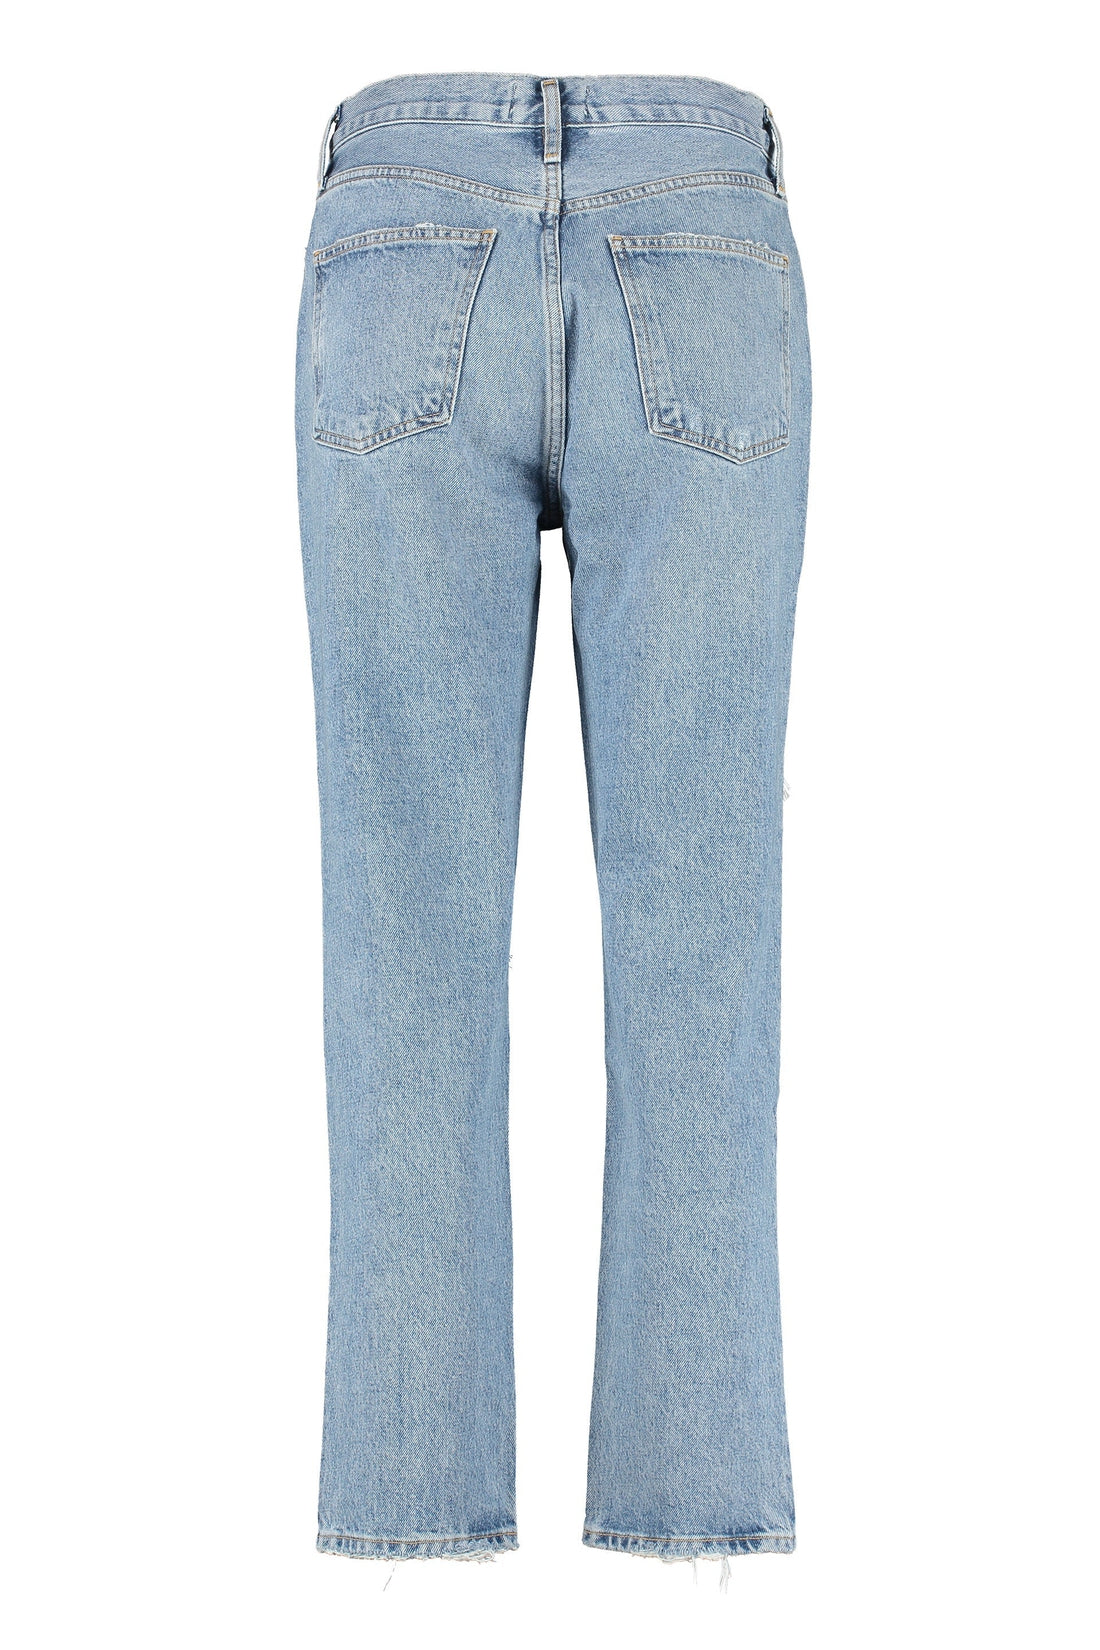 AGOLDE-OUTLET-SALE-Fen 5-pocket jeans-ARCHIVIST